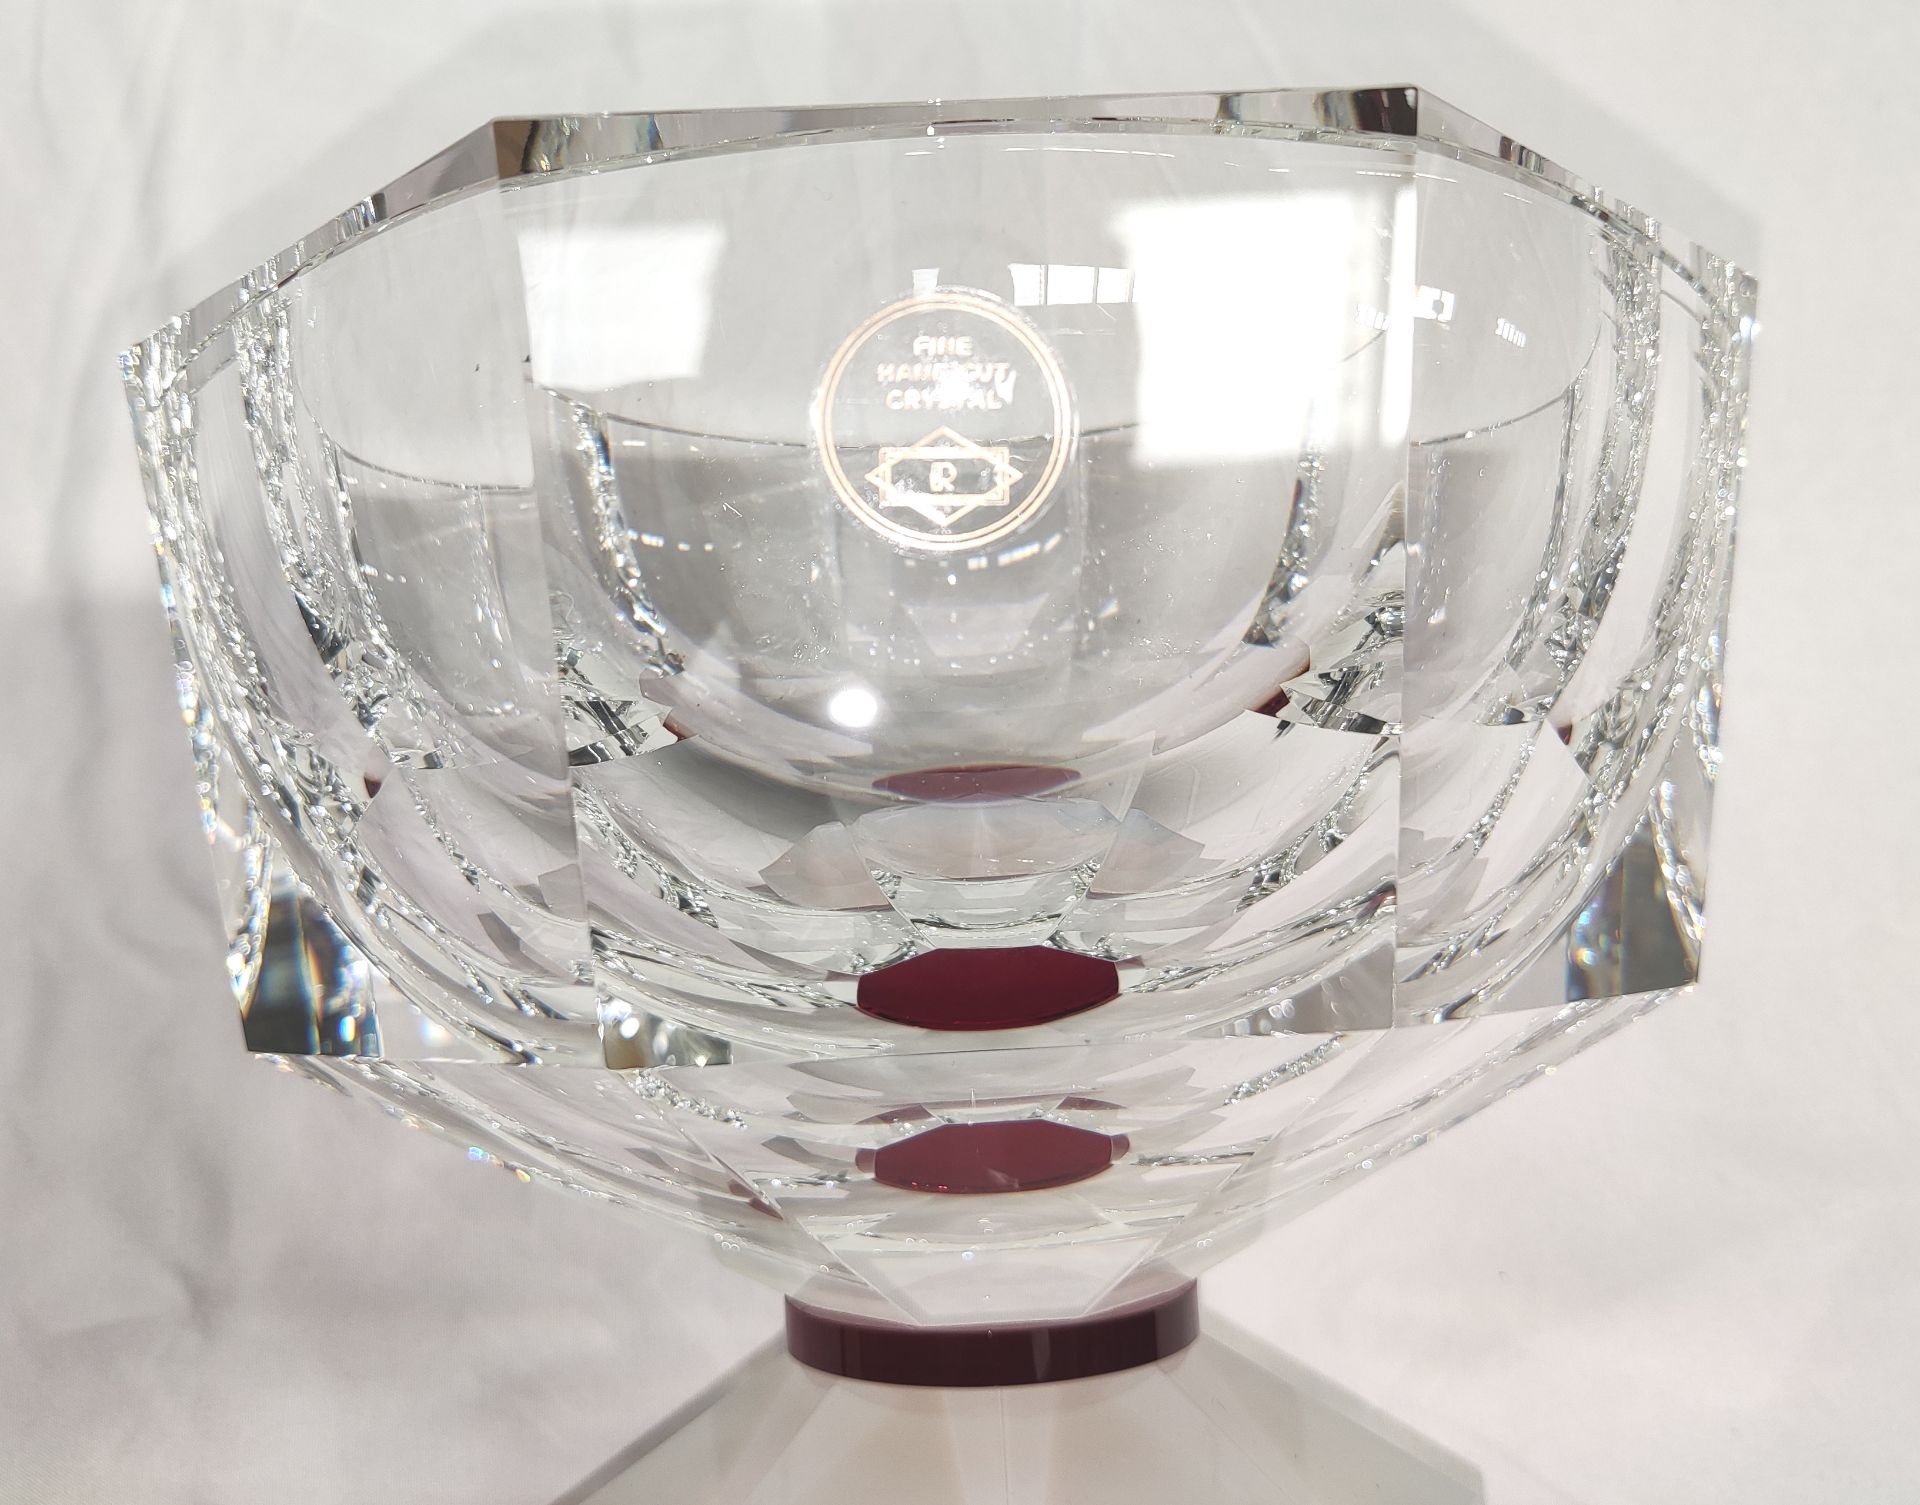 1 x REFLECTIONS COPENHAGEN Halifax Hand-Cut Crystal Glass Bowl In Clear/Milk/Plum - Original RRP £ - Image 6 of 21